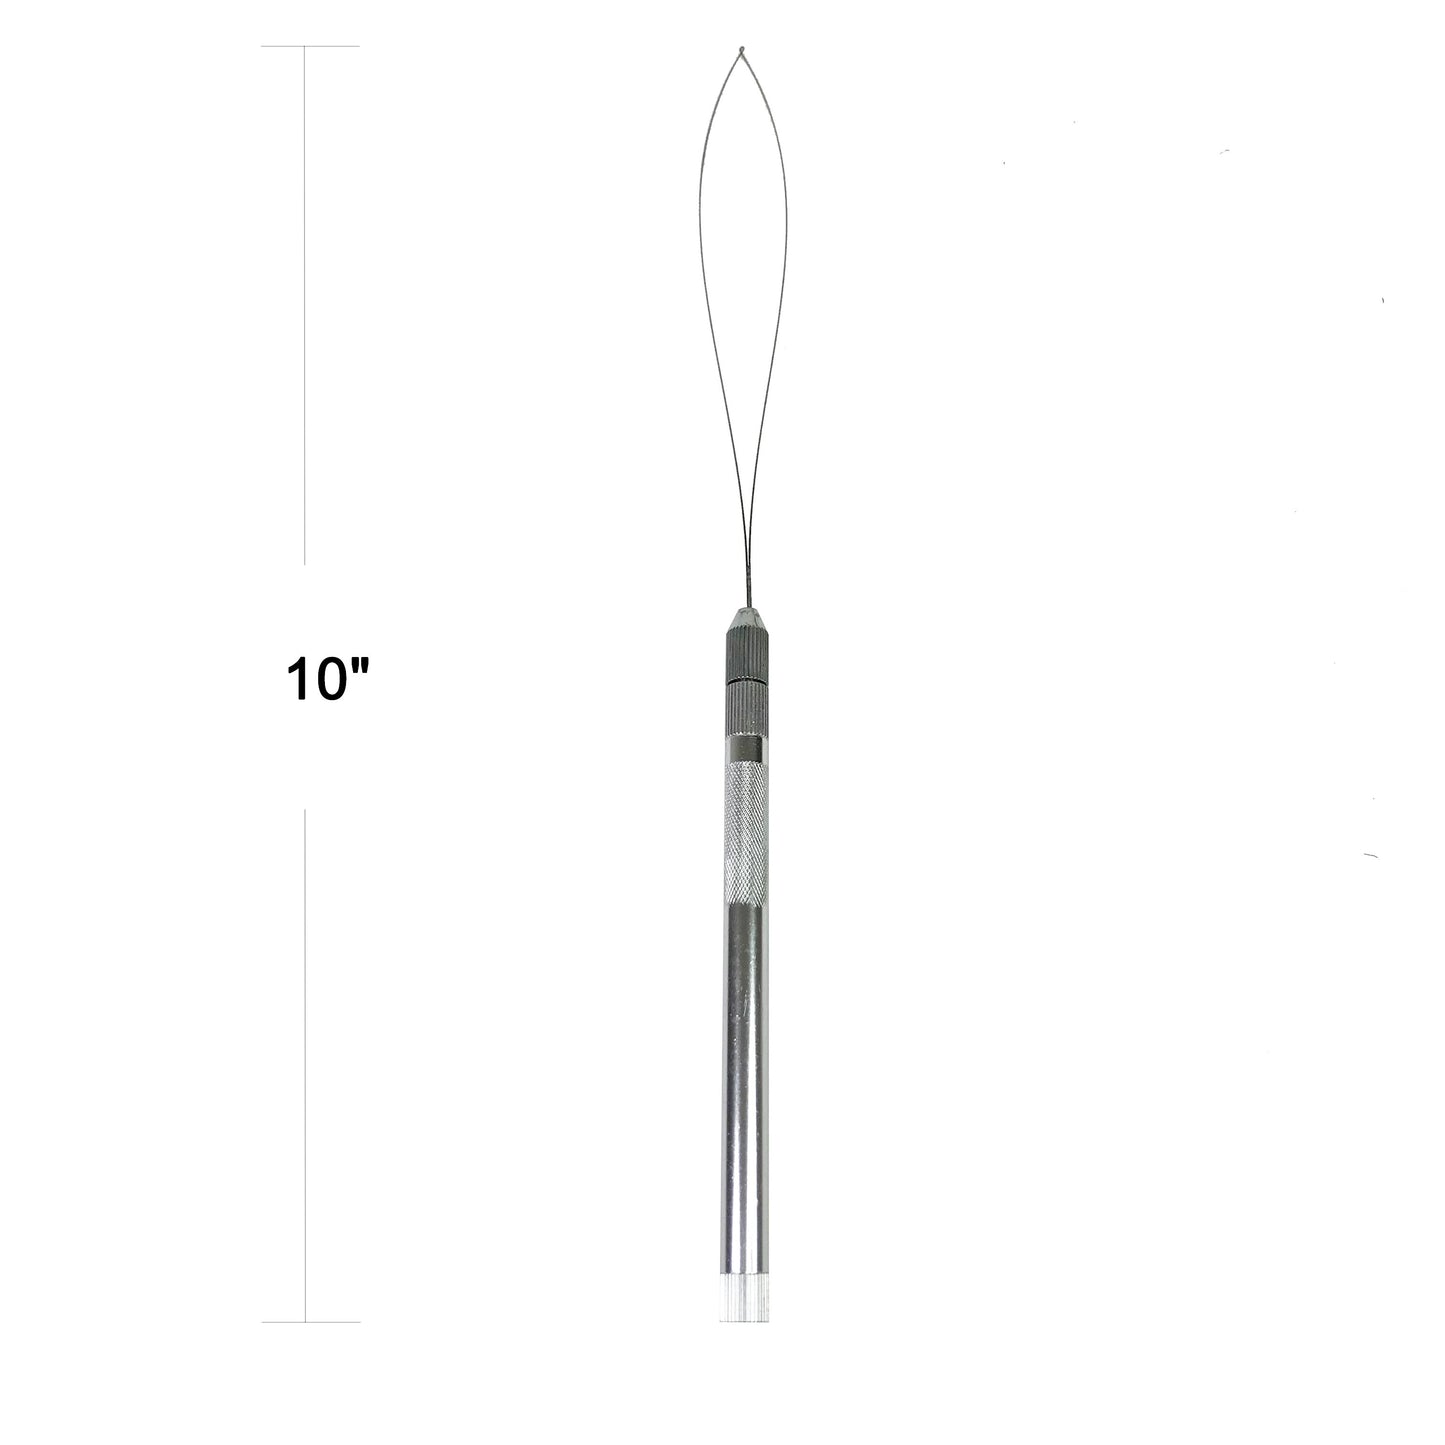 Aluminum 2-in-1 Loop Hook Pulling Needle Professional Hair Extensions Tool